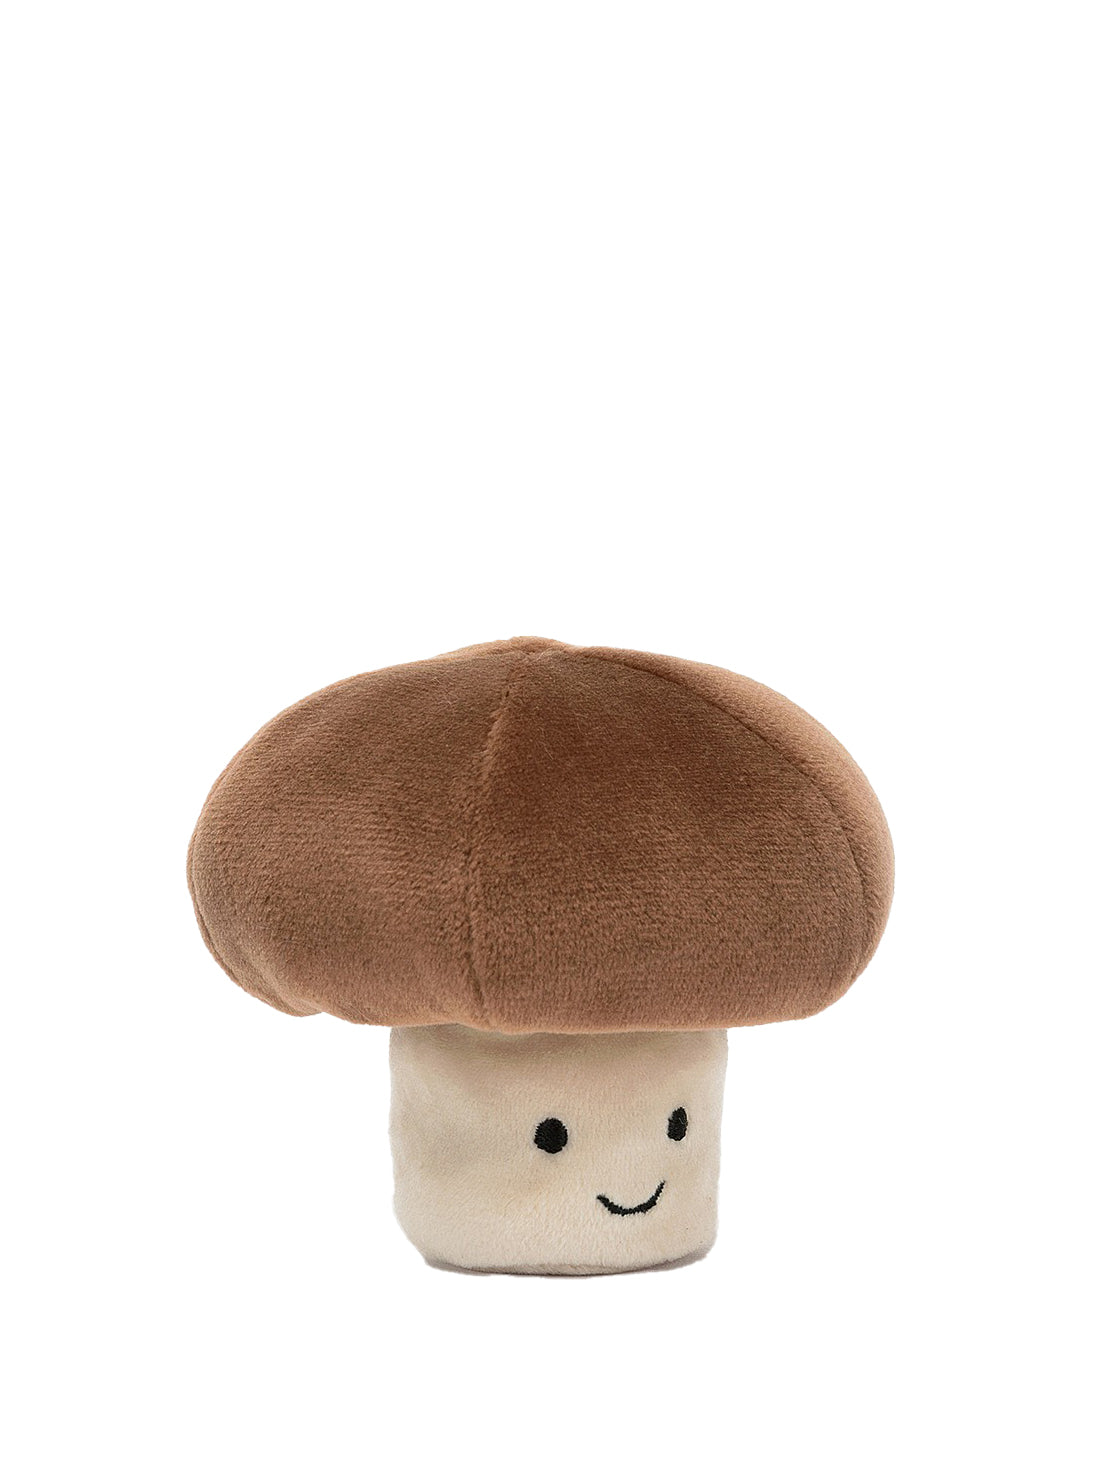 Vivacious Vegetable Mushroom soft toy, brown